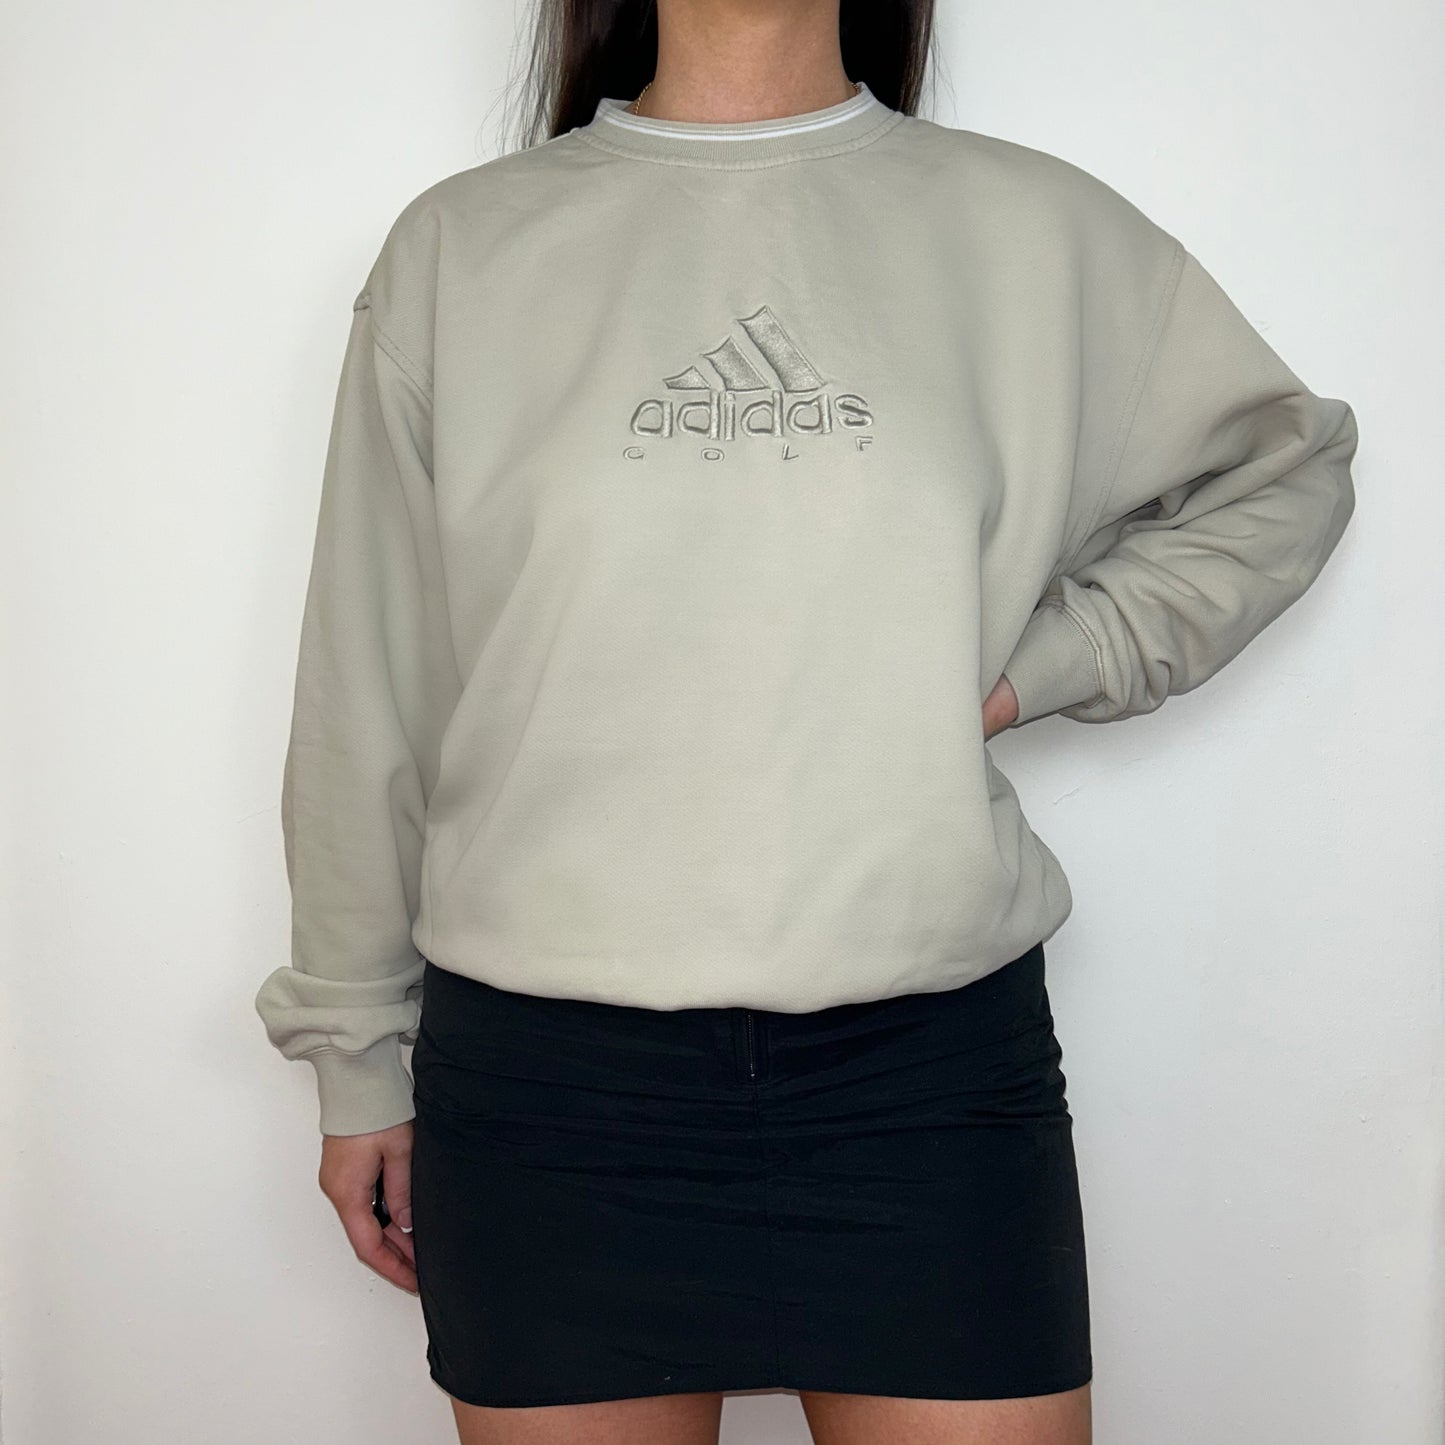 beige sweatshirt with adidas golf logo shown on a model wearing a black mini skirt